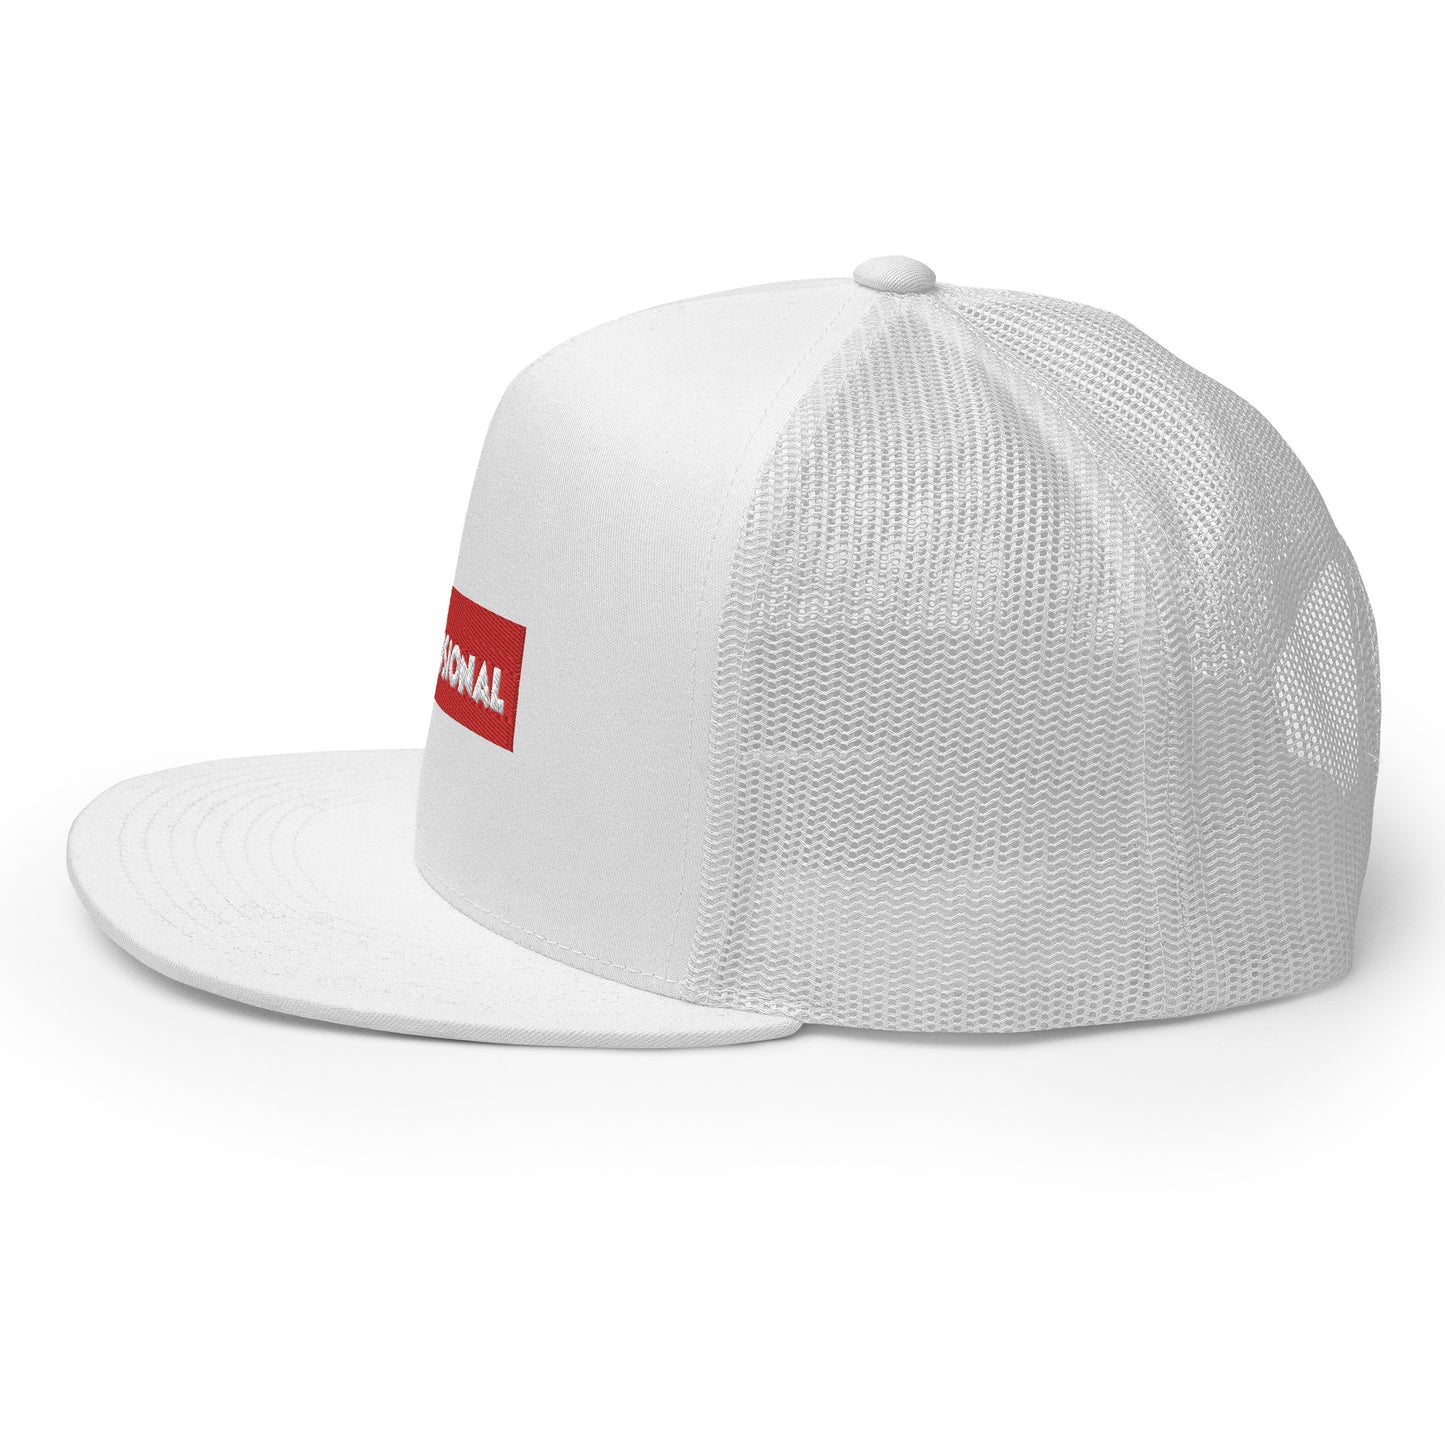 Delusional Brand / #01 / Hat / Trucker Cap Red Box Logo